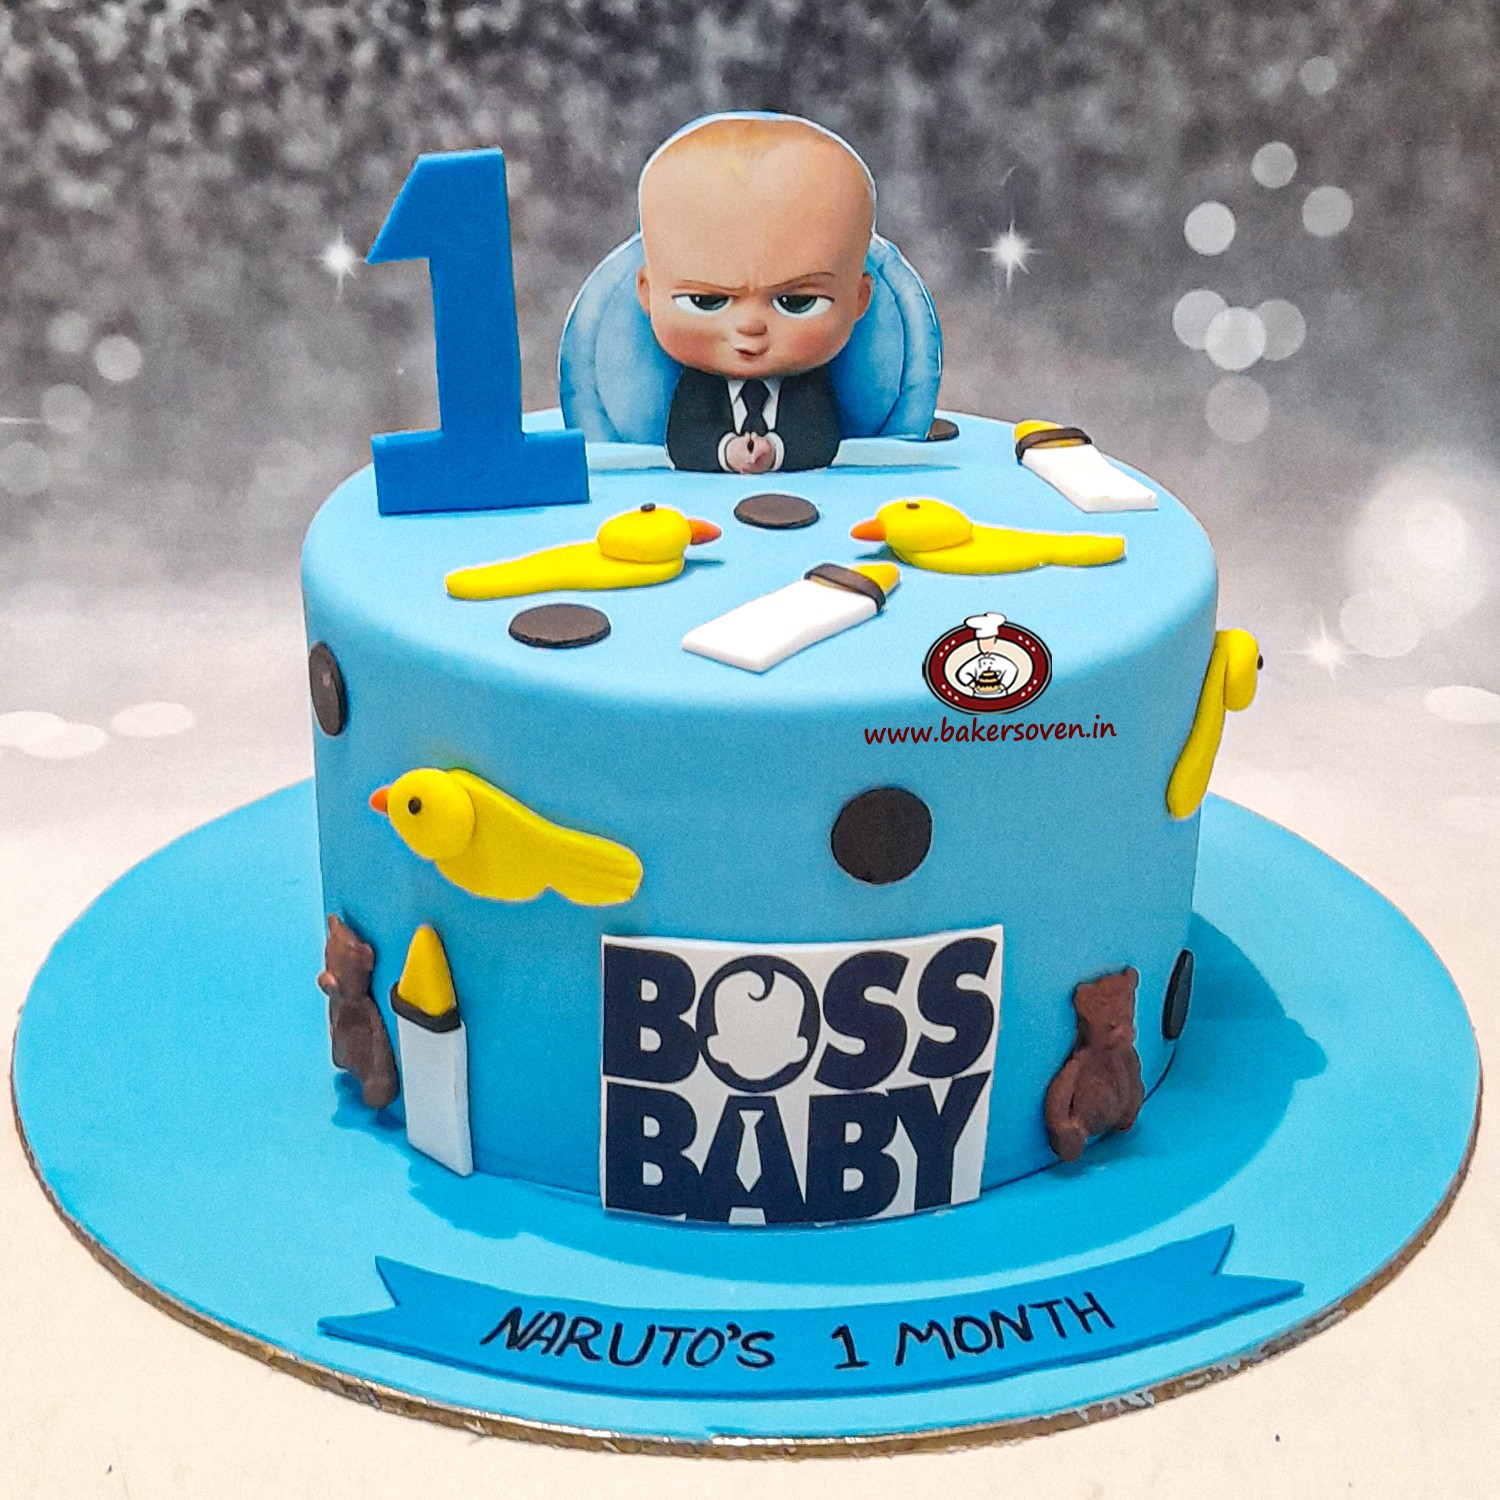 Baby Boss Birthday Cakes, boss baby cake decorations